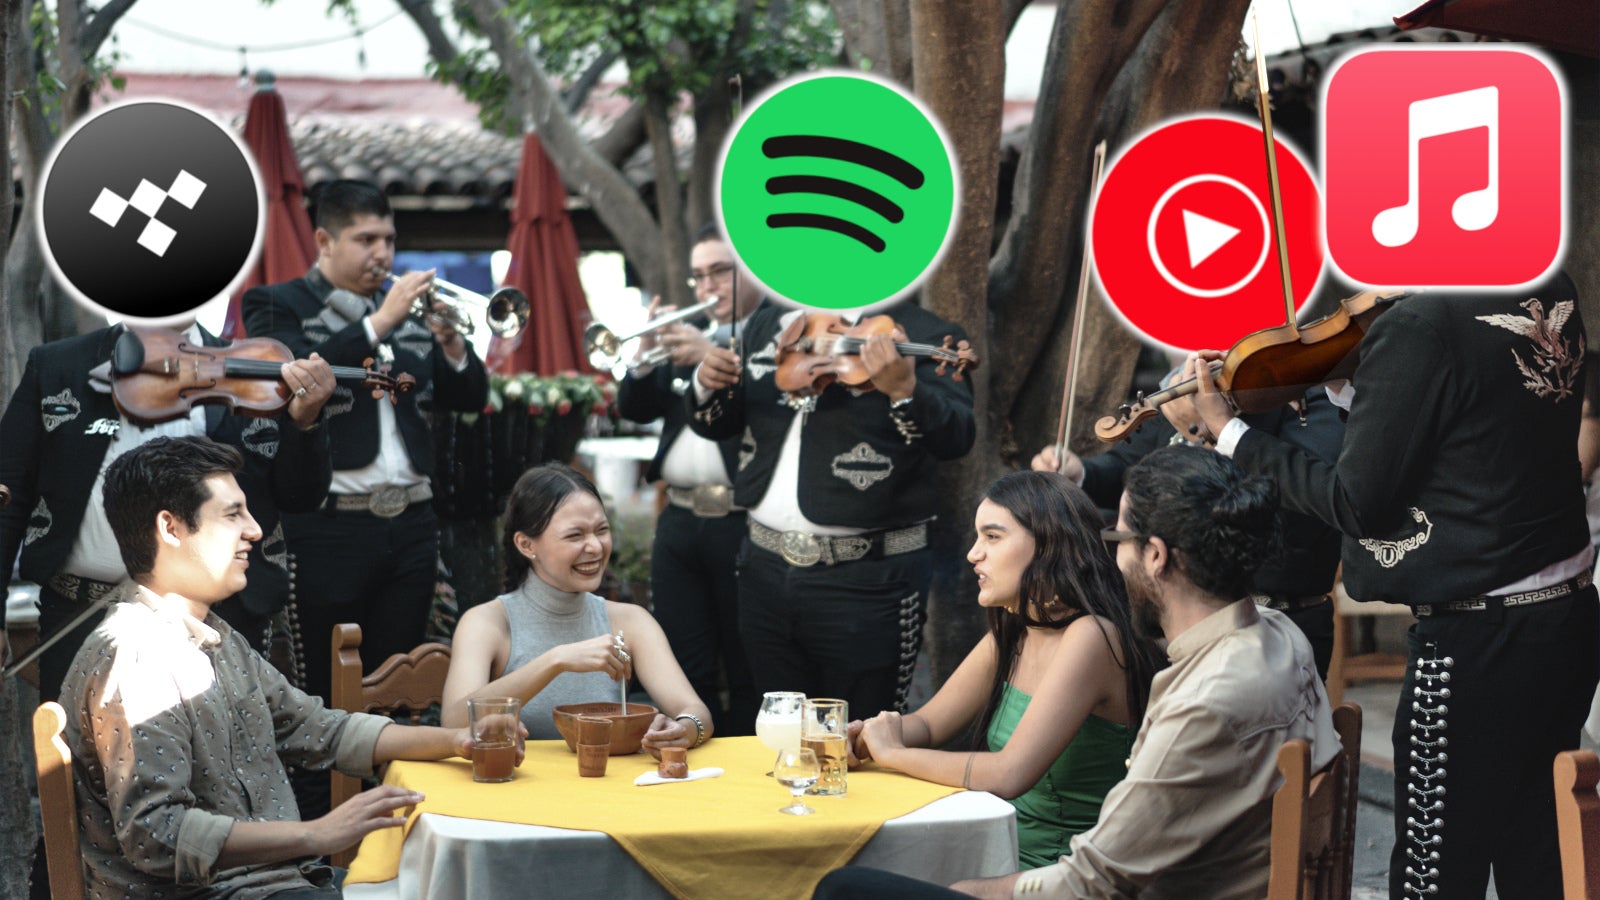 tidal vs spotify vs apple music market share